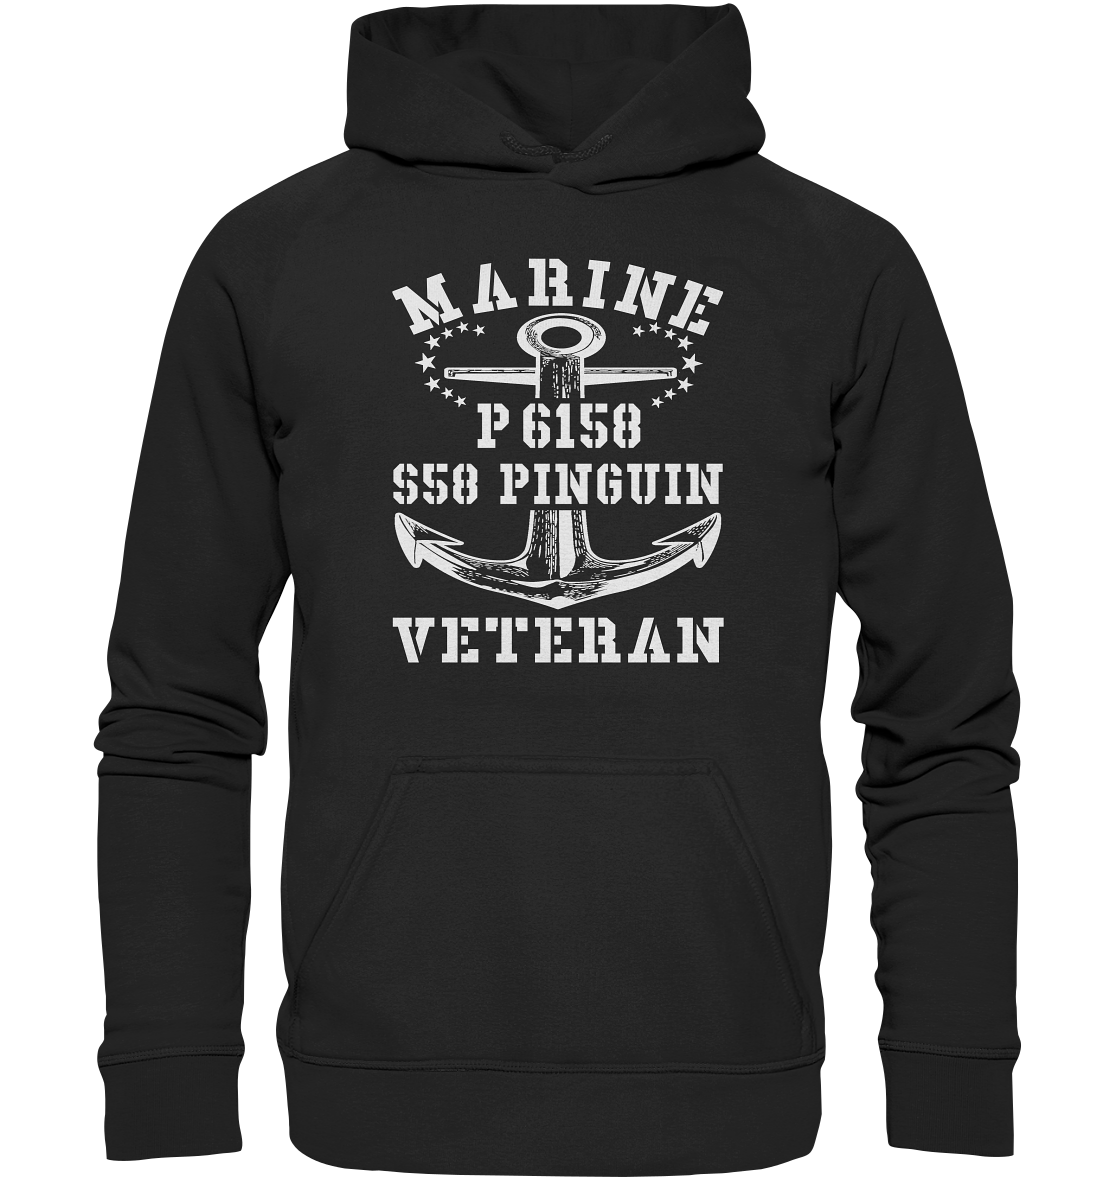 P6158 S58 PINGUIN Marine Veteran - Basic Unisex Hoodie XL